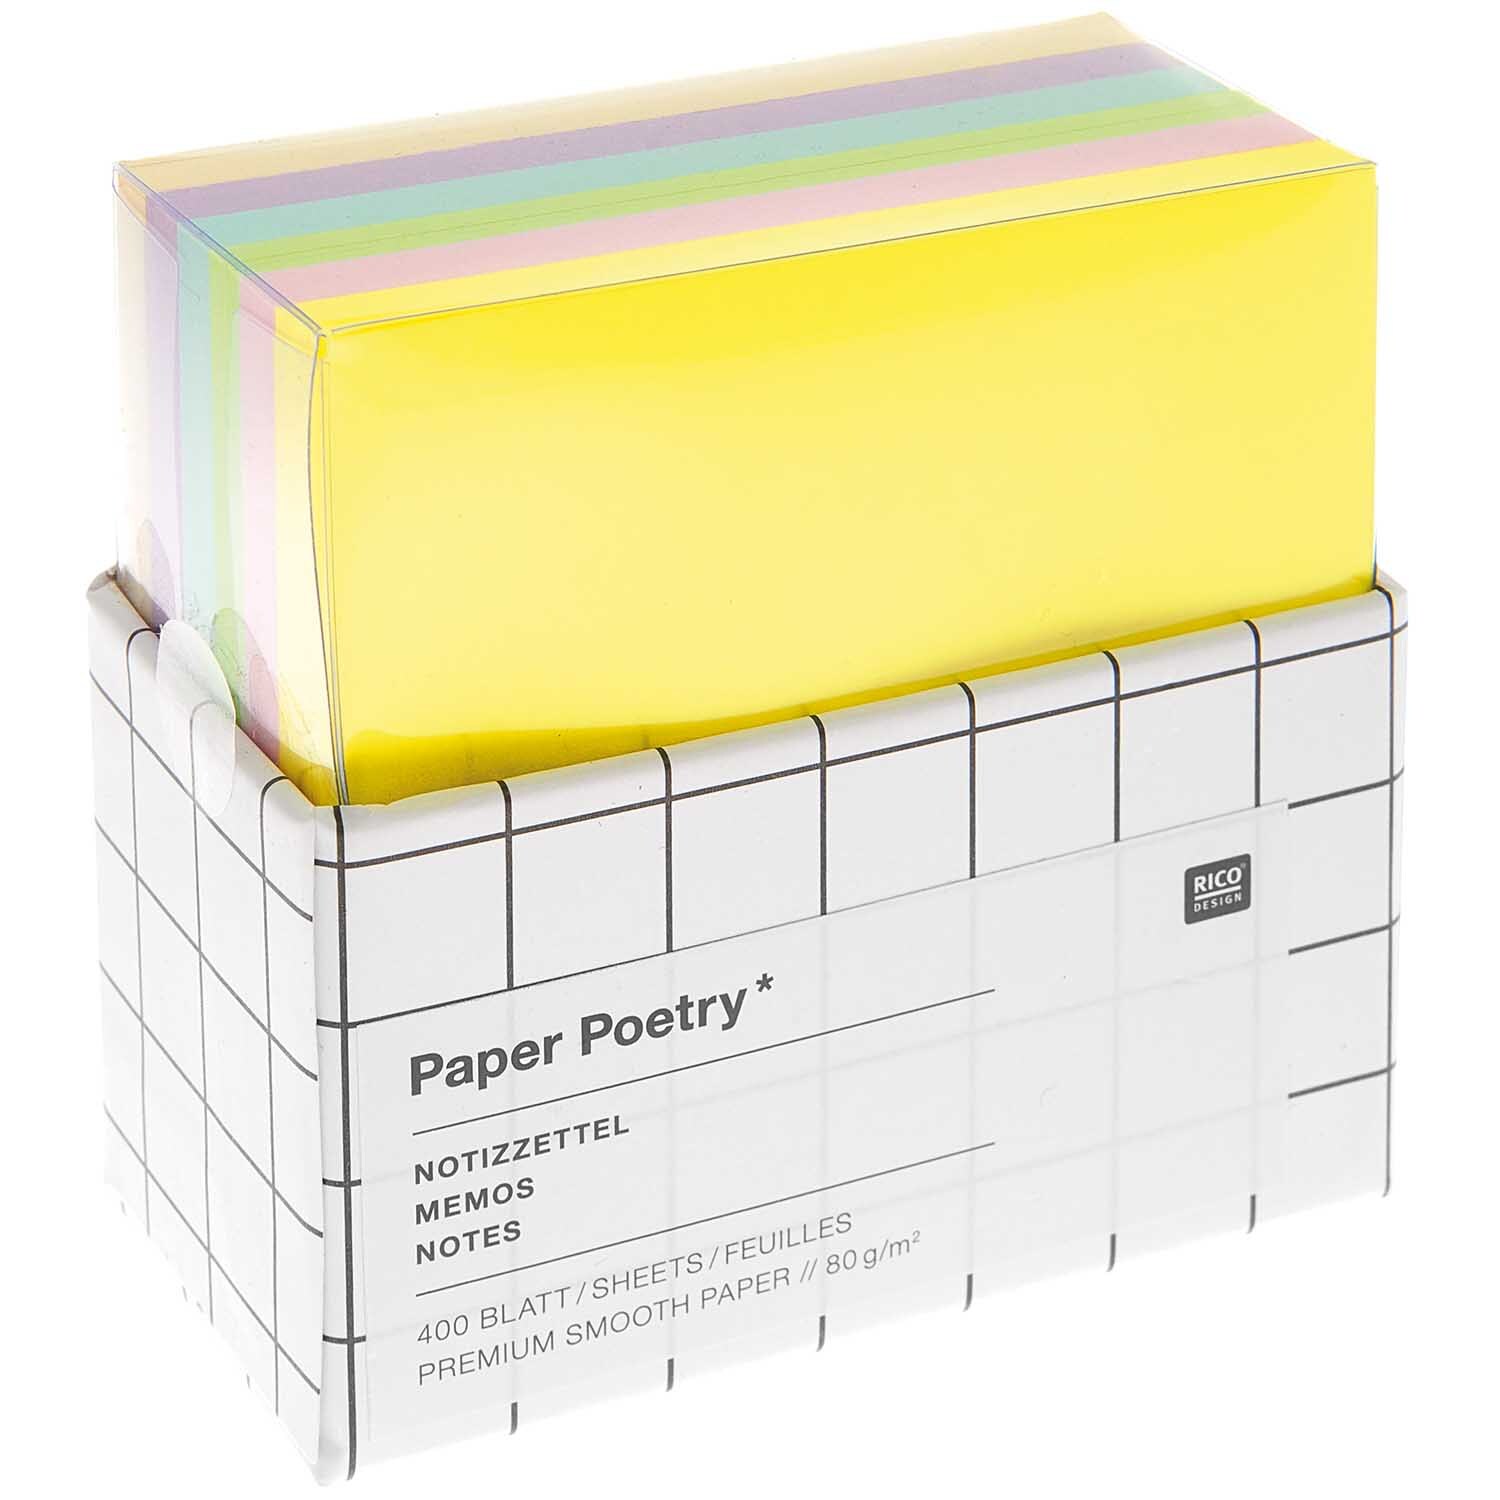 Paper Poetry Notizzettel Box 9x9cm 400 Blatt